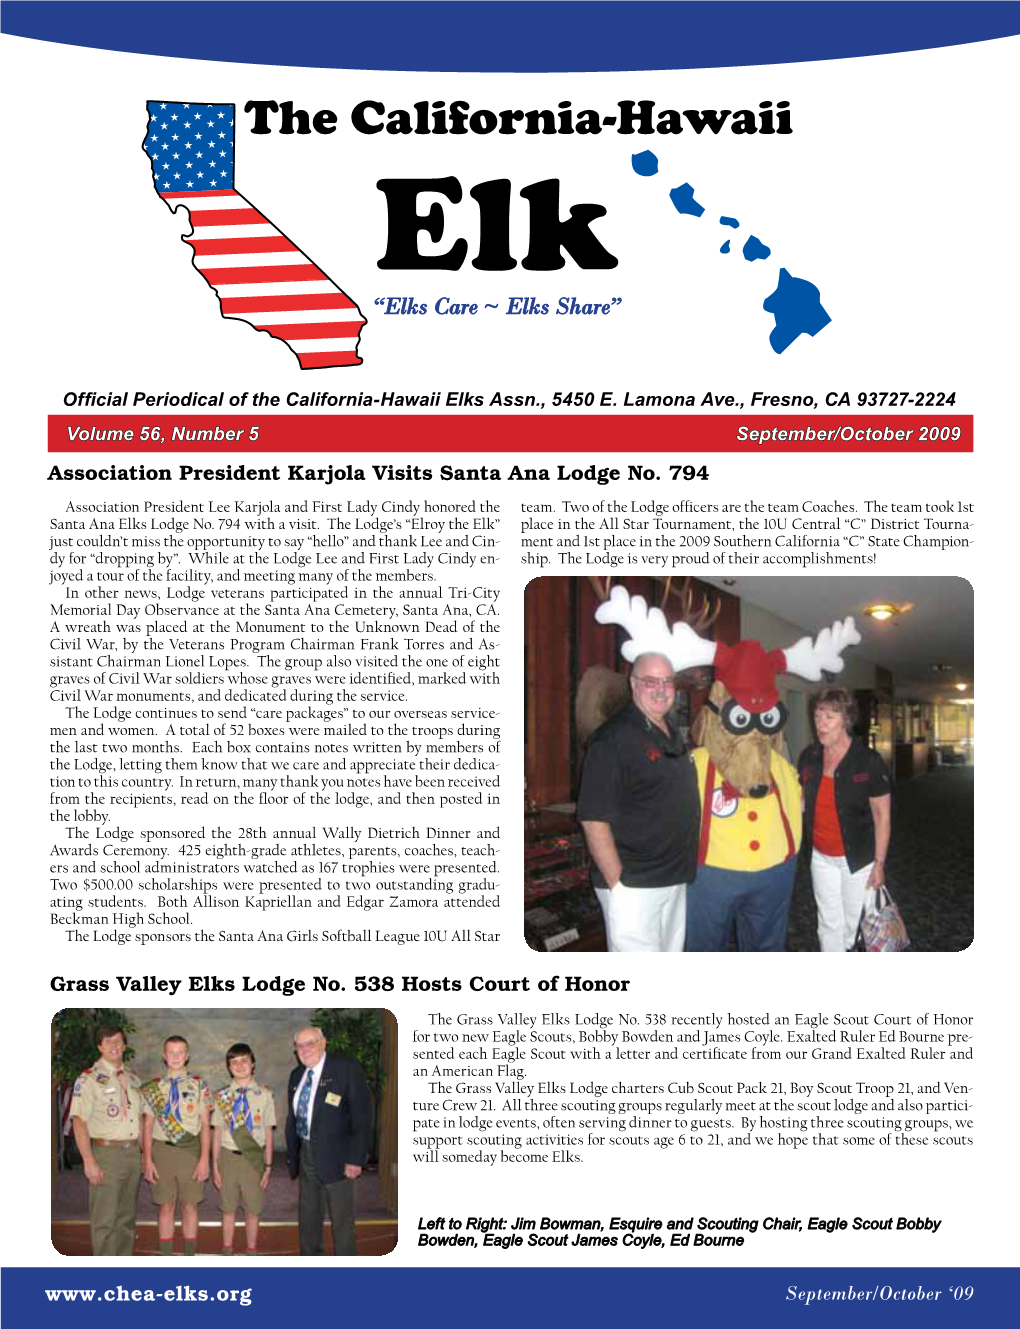 The California-Hawaii Elk “Elks Care ~ Elks Share”